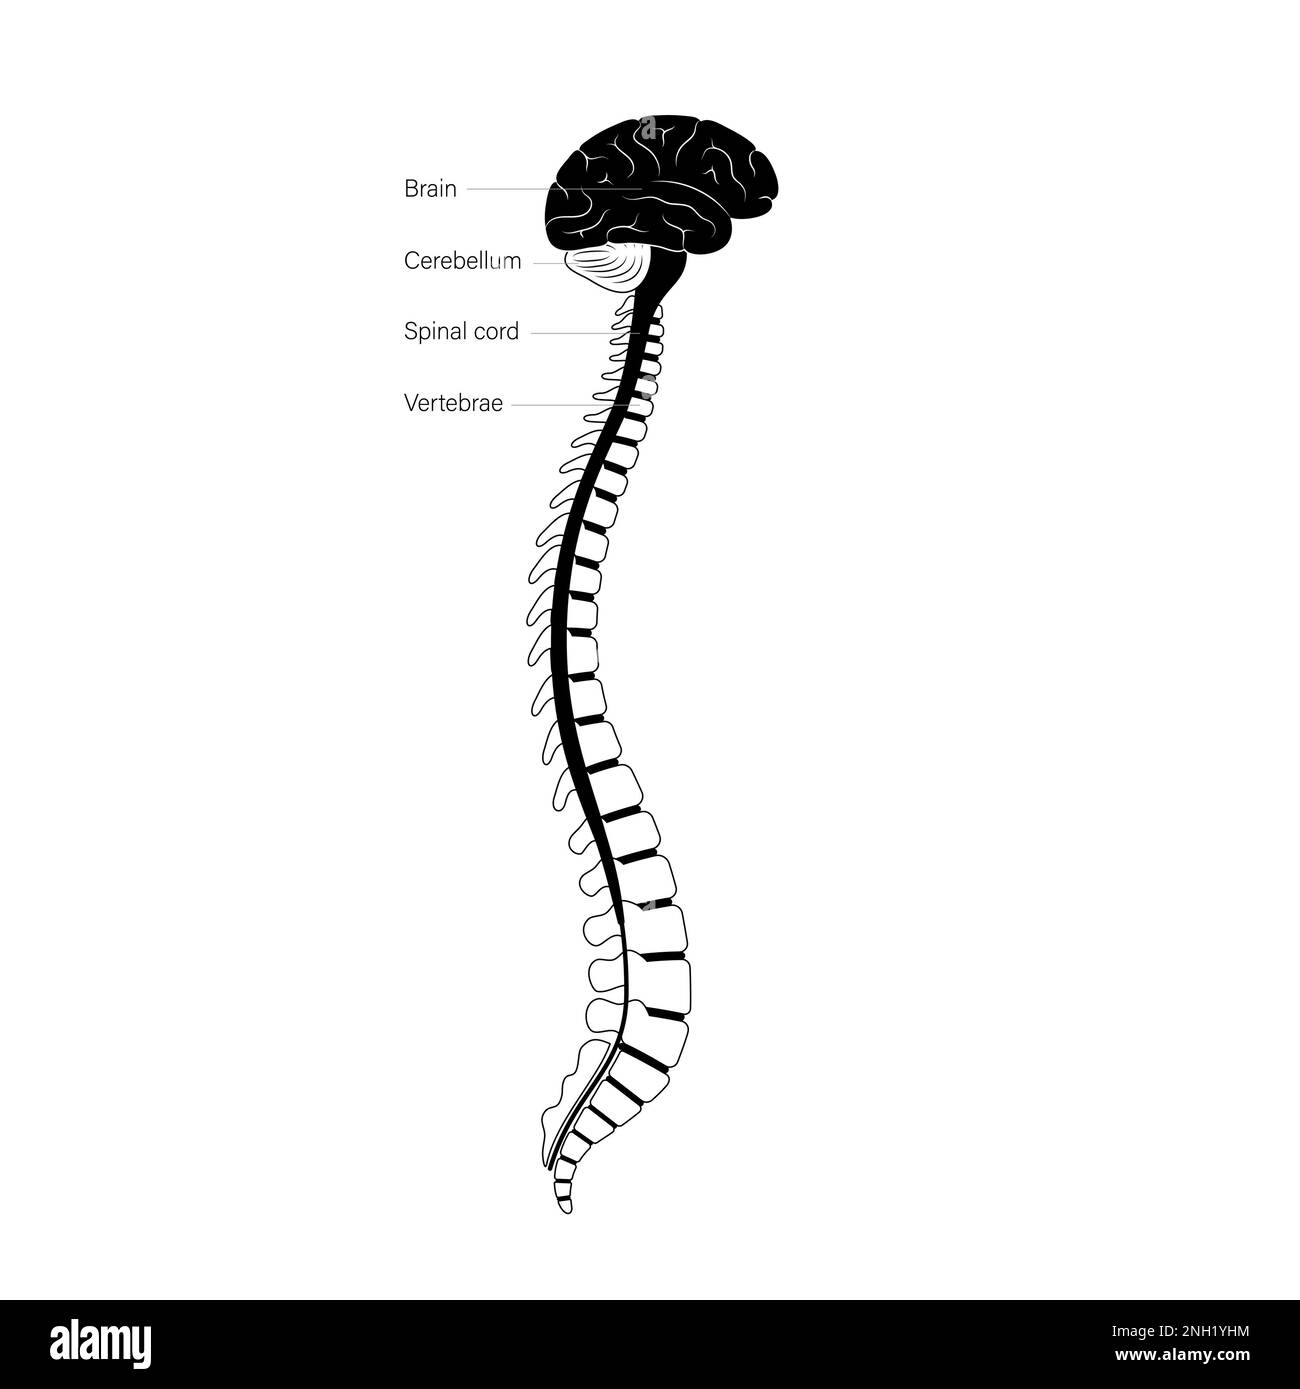 Spinal cord anatomy, illustration Stock Photo - Alamy